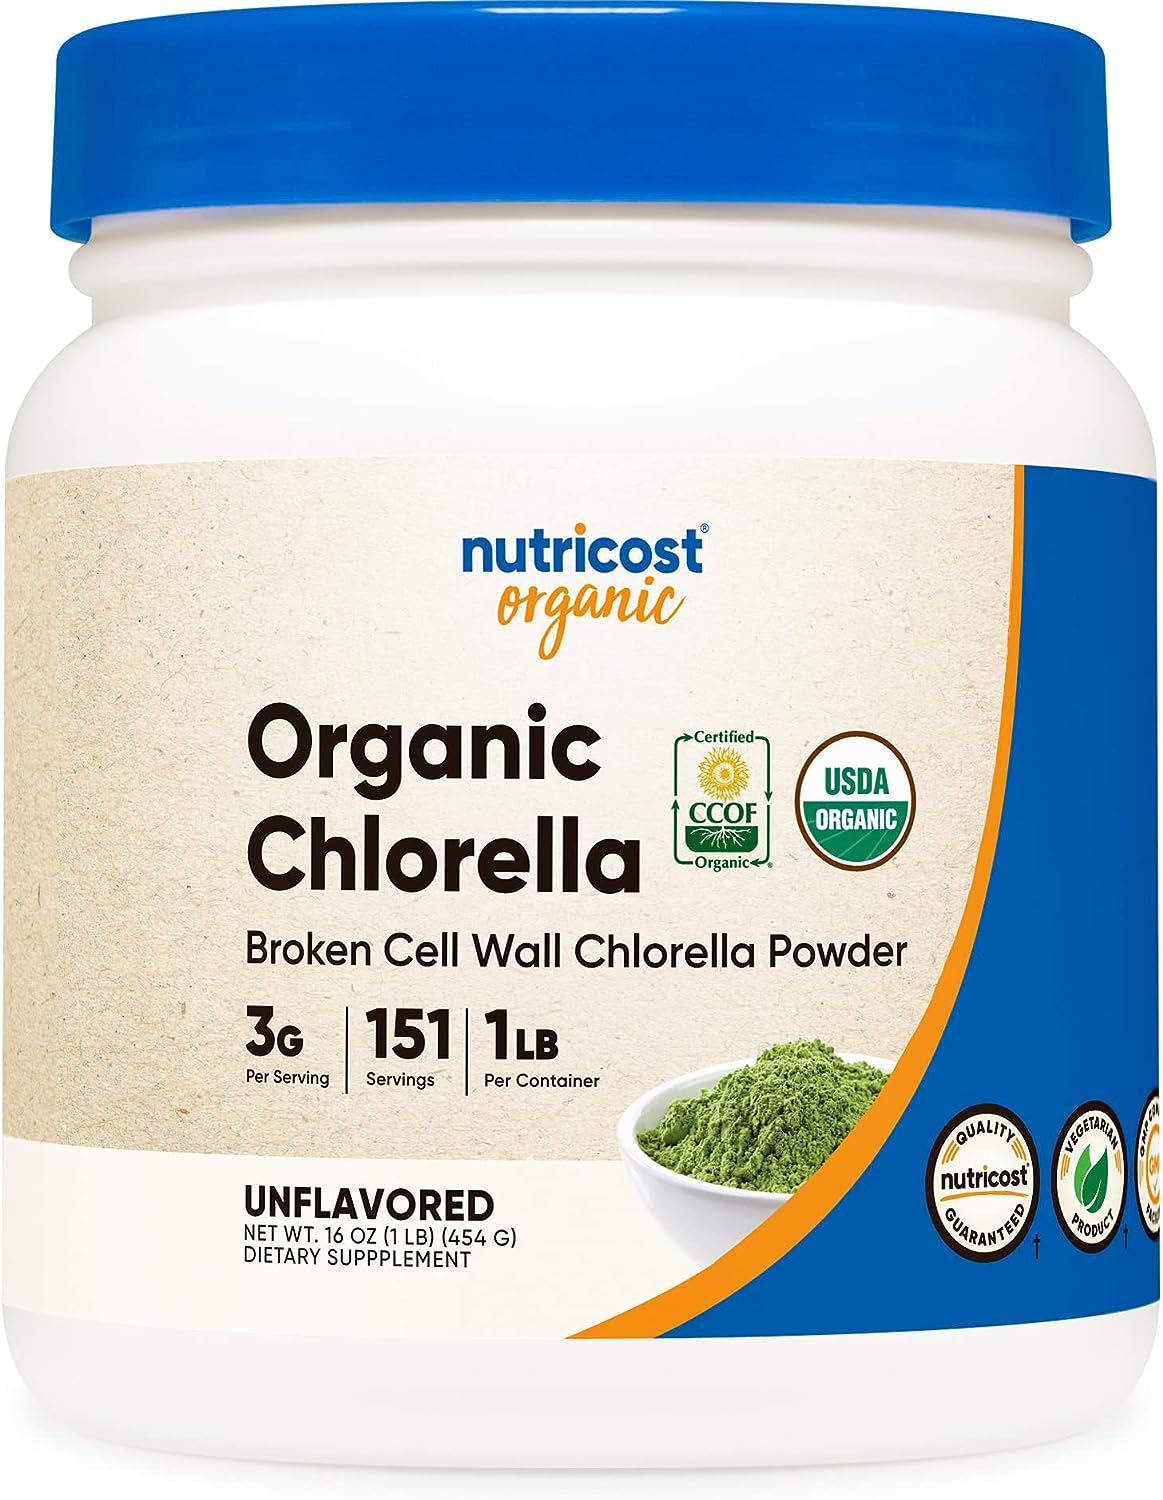 Nutricost Organic Chlorella Powder 16 (1) - 3g Per Serving